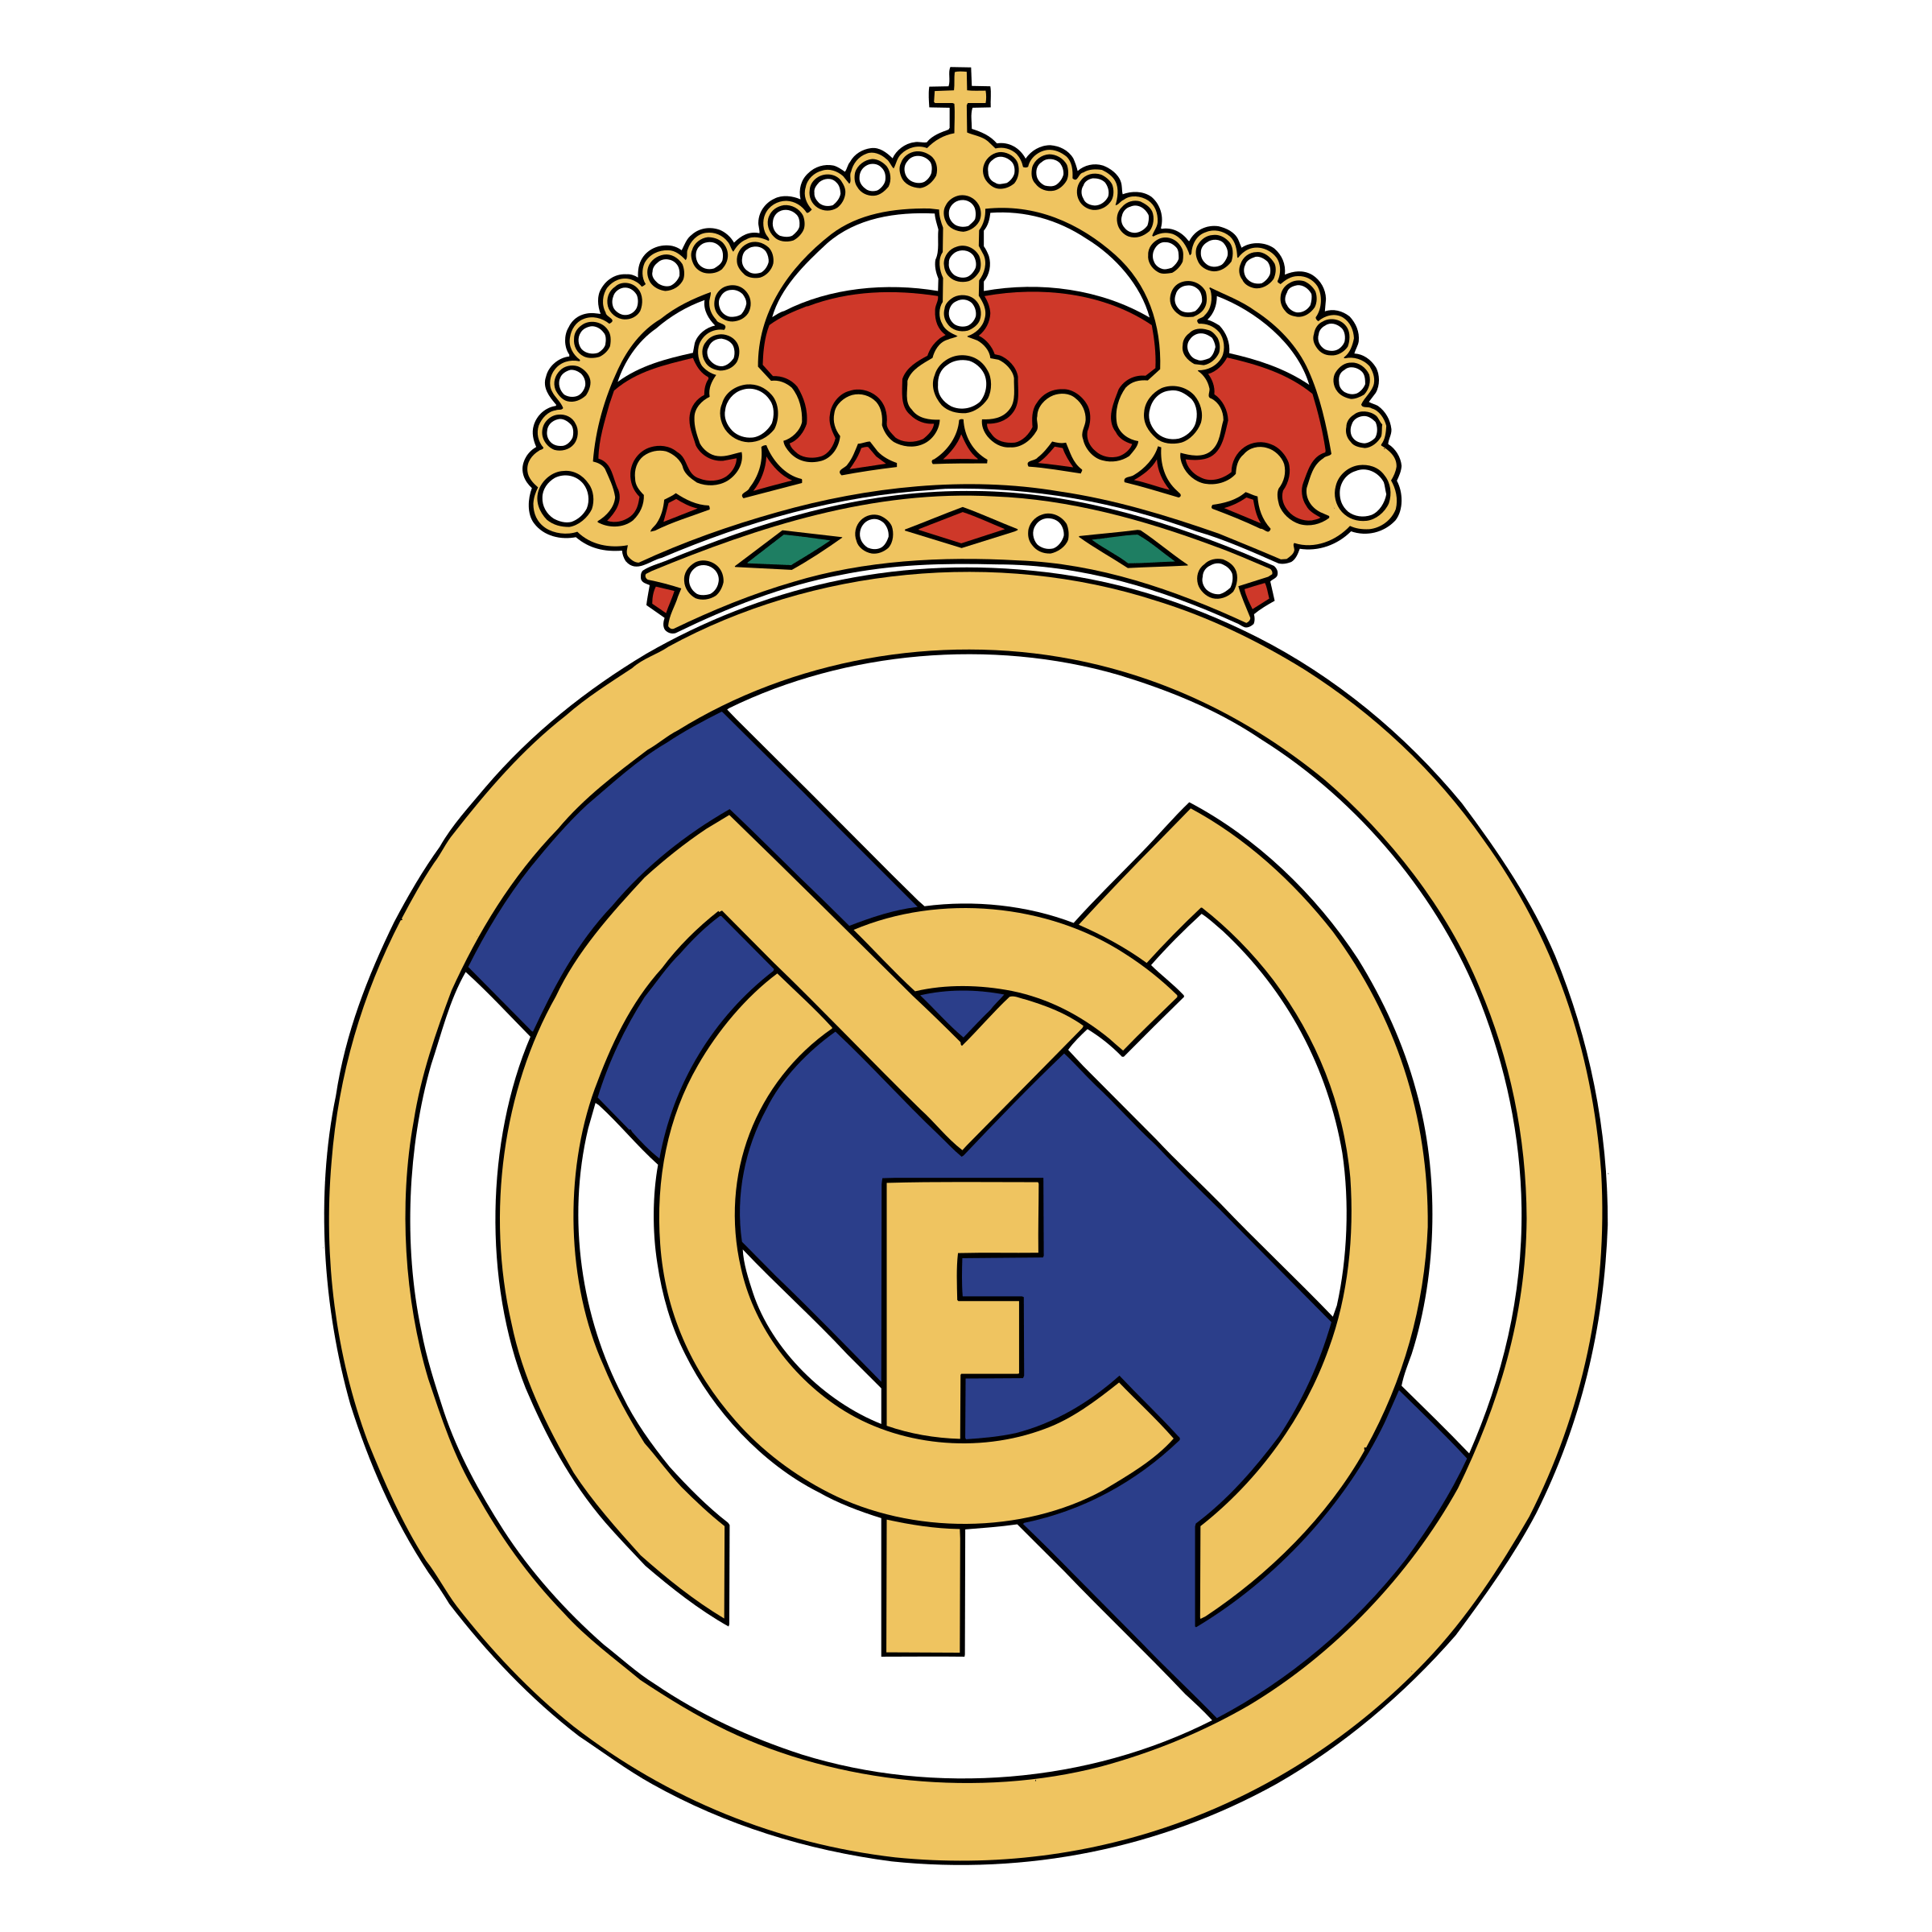 C-Real Logo - Real Madrid C F Logo PNG Transparent & SVG Vector - Freebie Supply